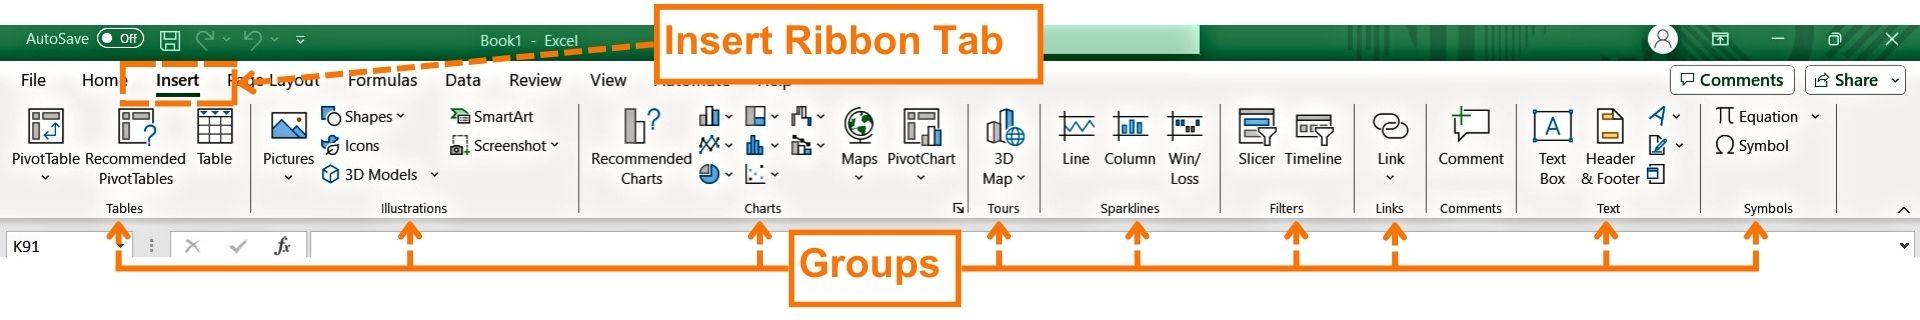 Insert Ribbon Tab Header of MS Excel - Excel Hippo